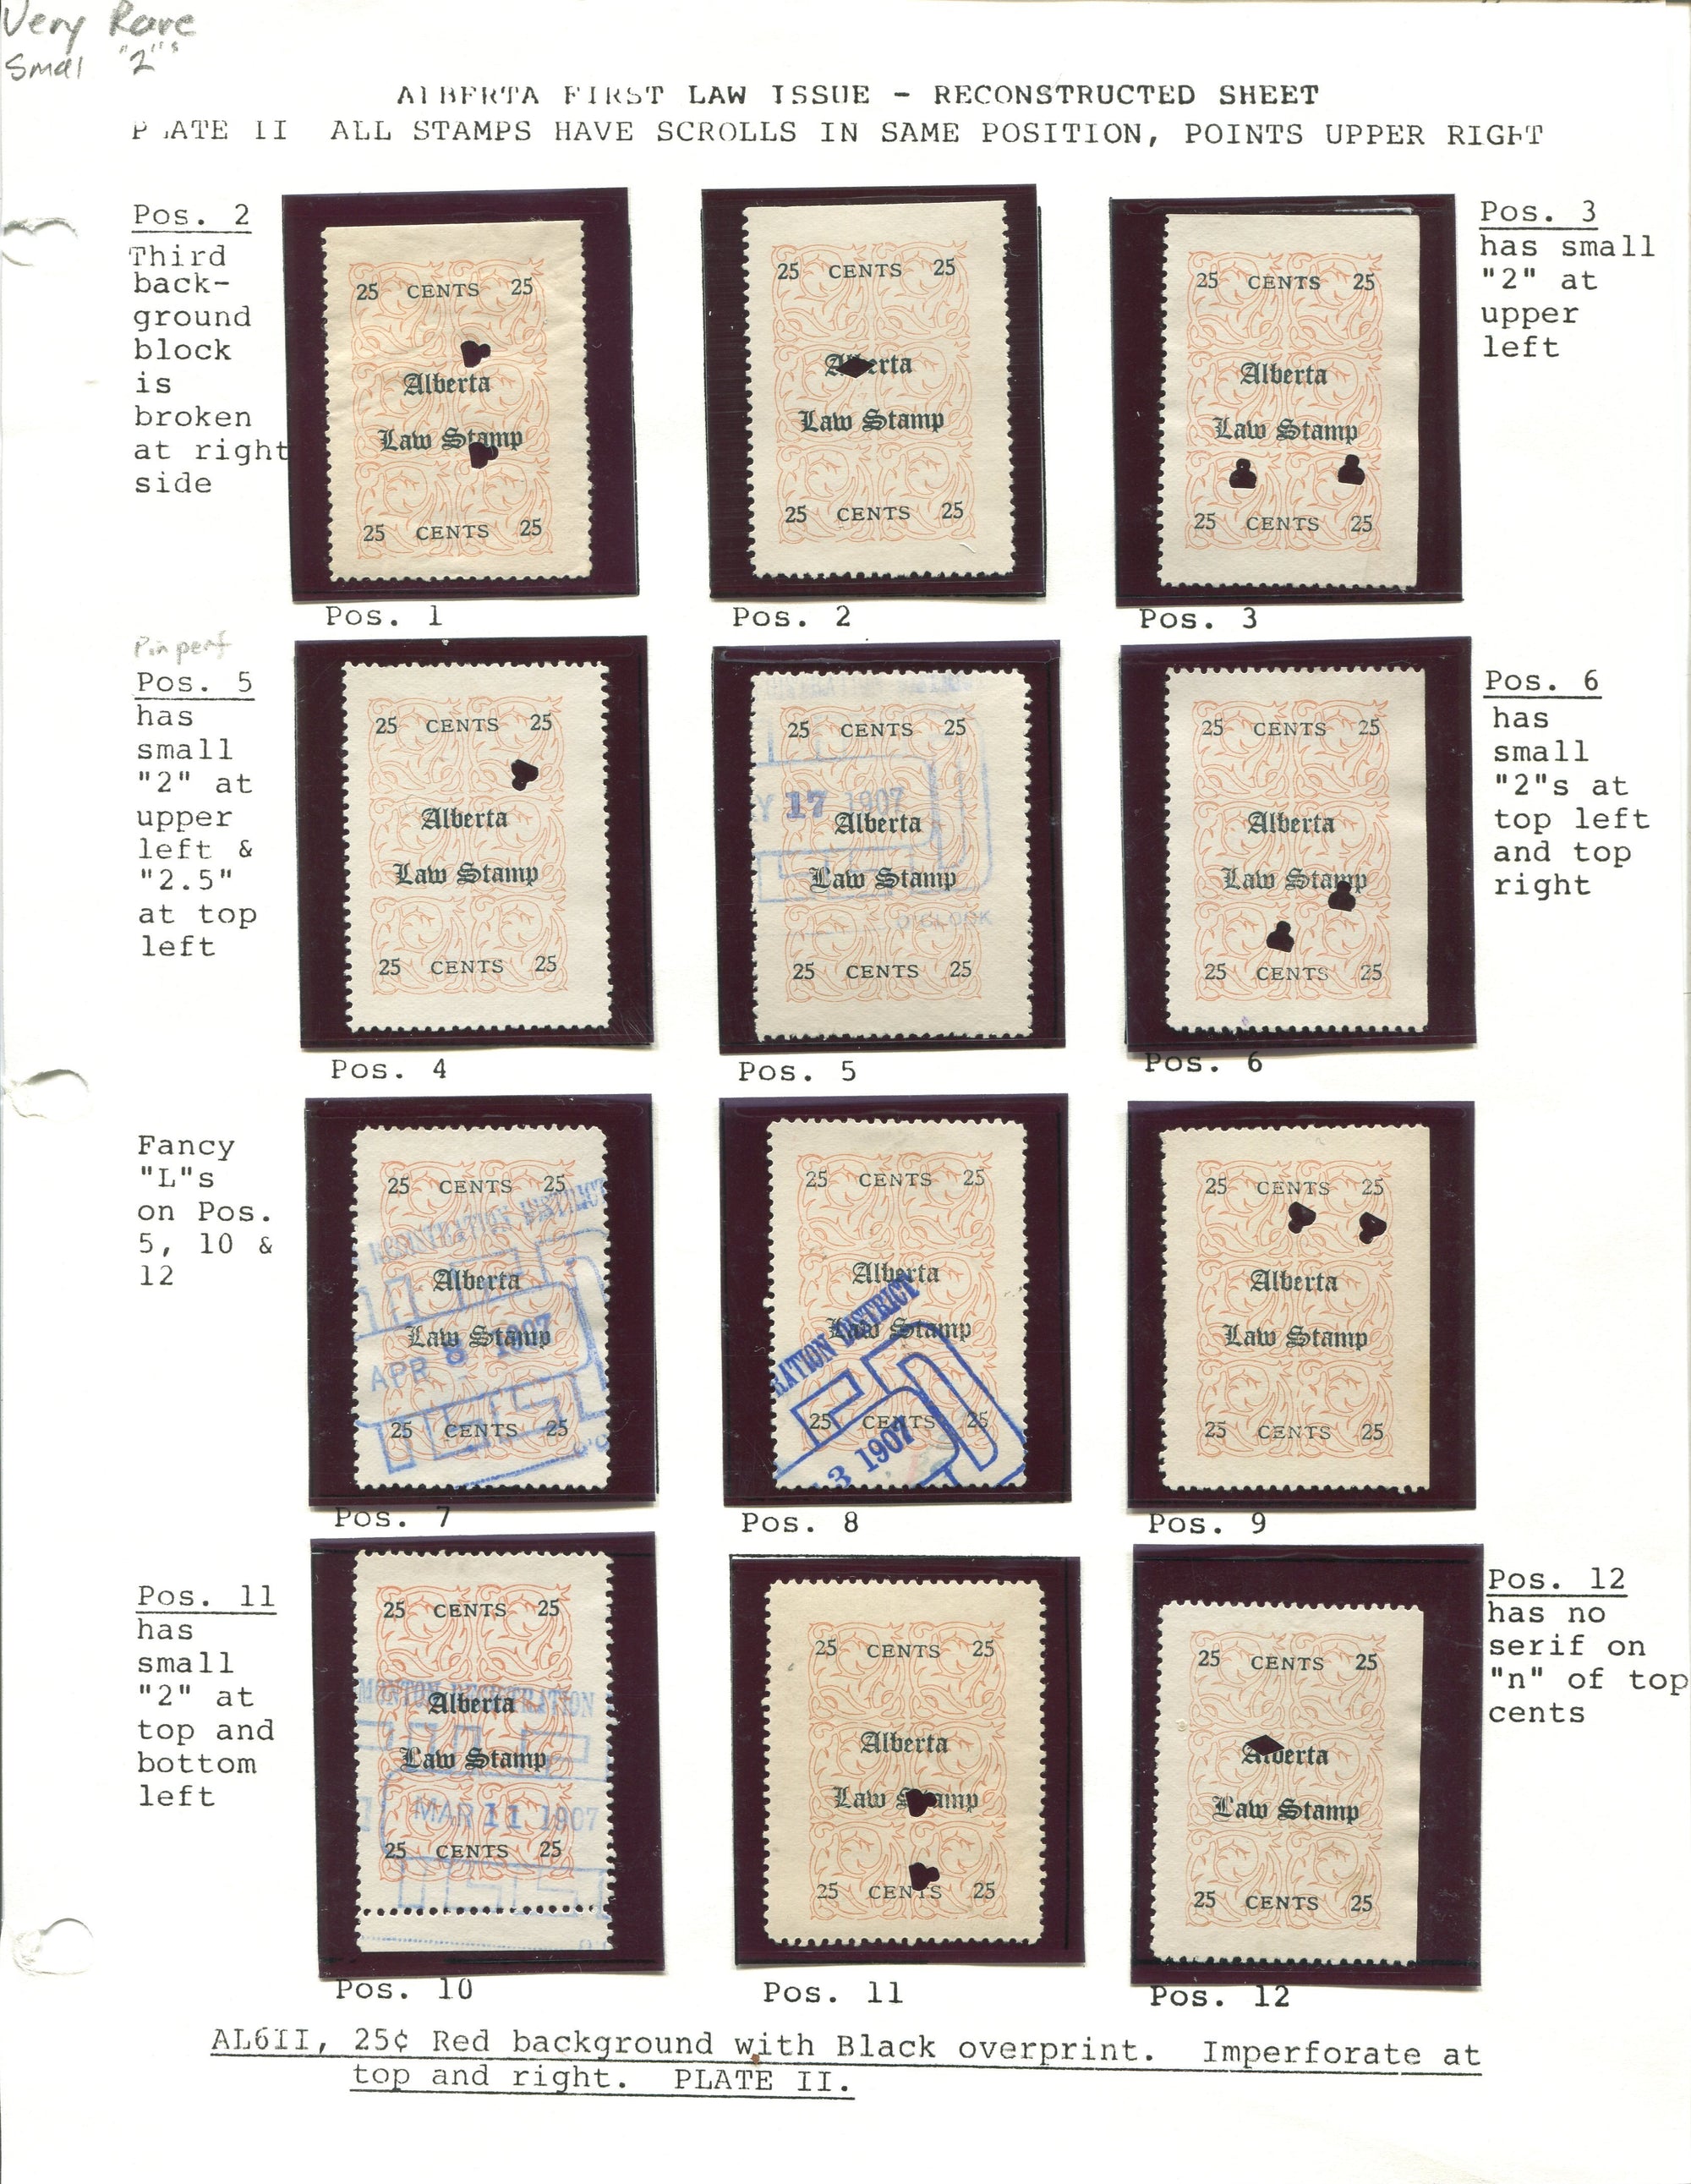 0006AL1709 - AL6 - Used Reconstructed Sheet - Deveney Stamps Ltd. Canadian Stamps